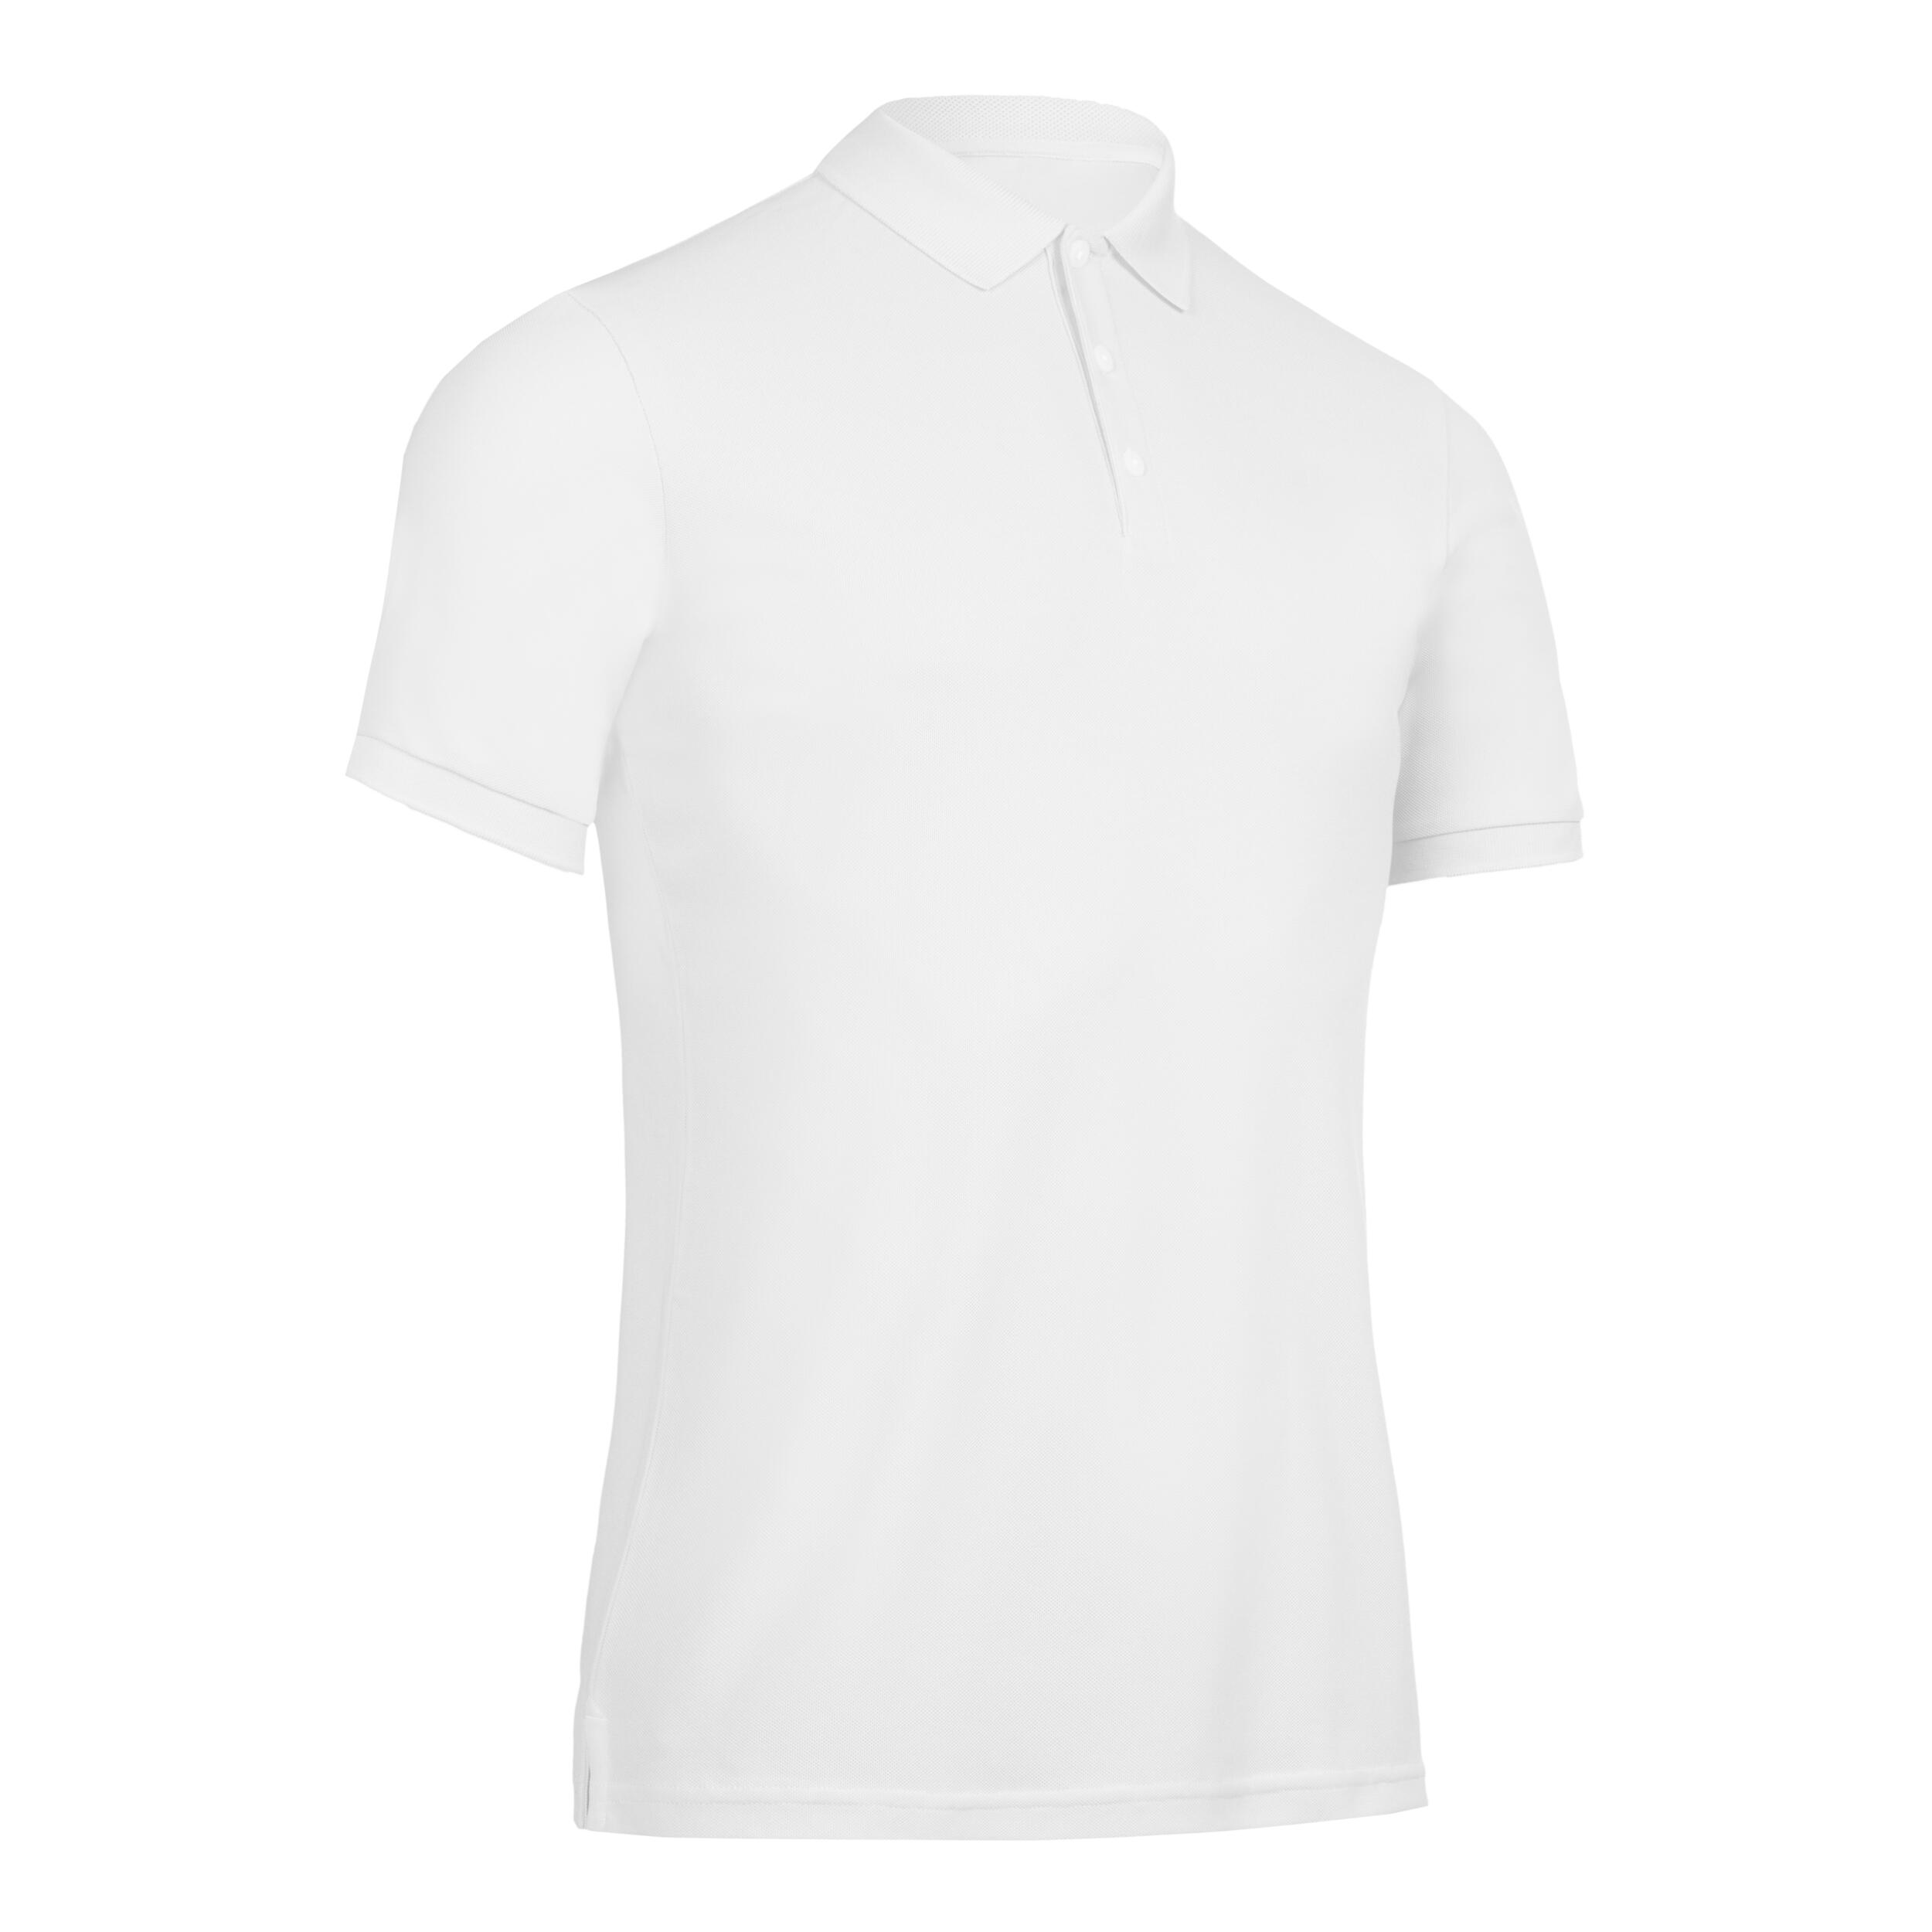 Refurbished Mens golf short sleeve polo shirt - A Grade 1/6